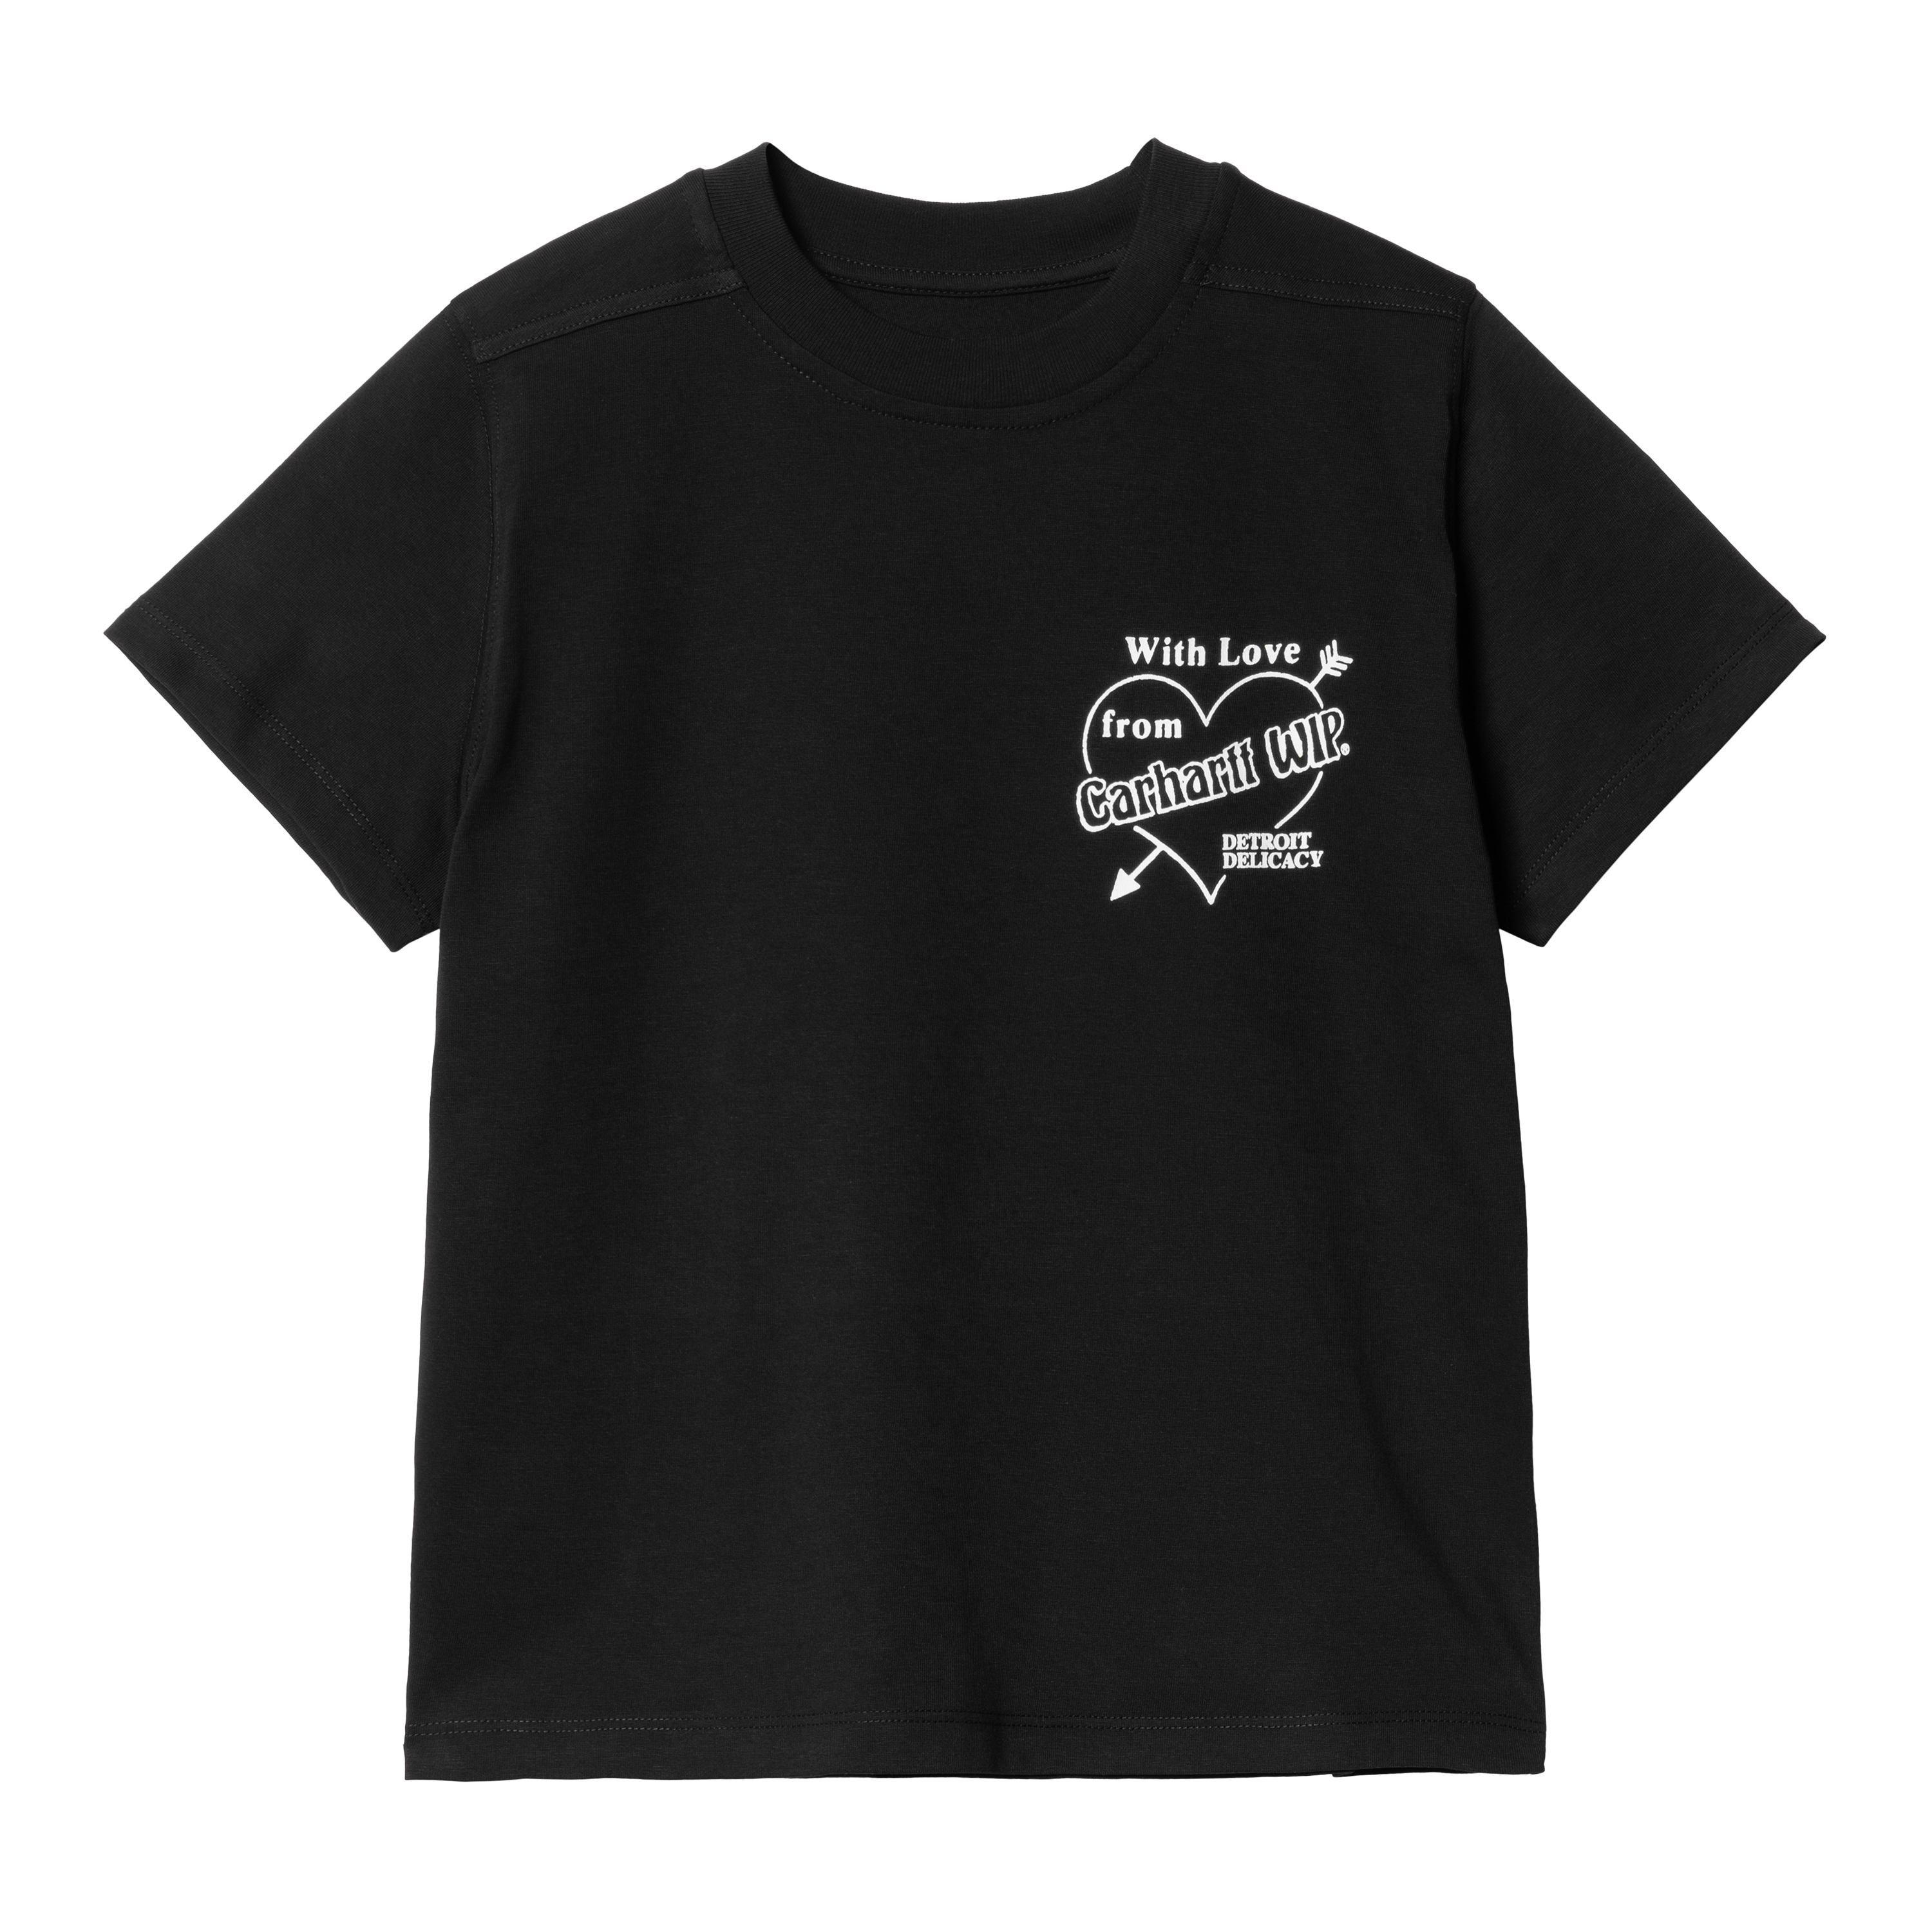 Carhartt WIP Women’s Short Sleeve Delicacy T-Shirt in Black